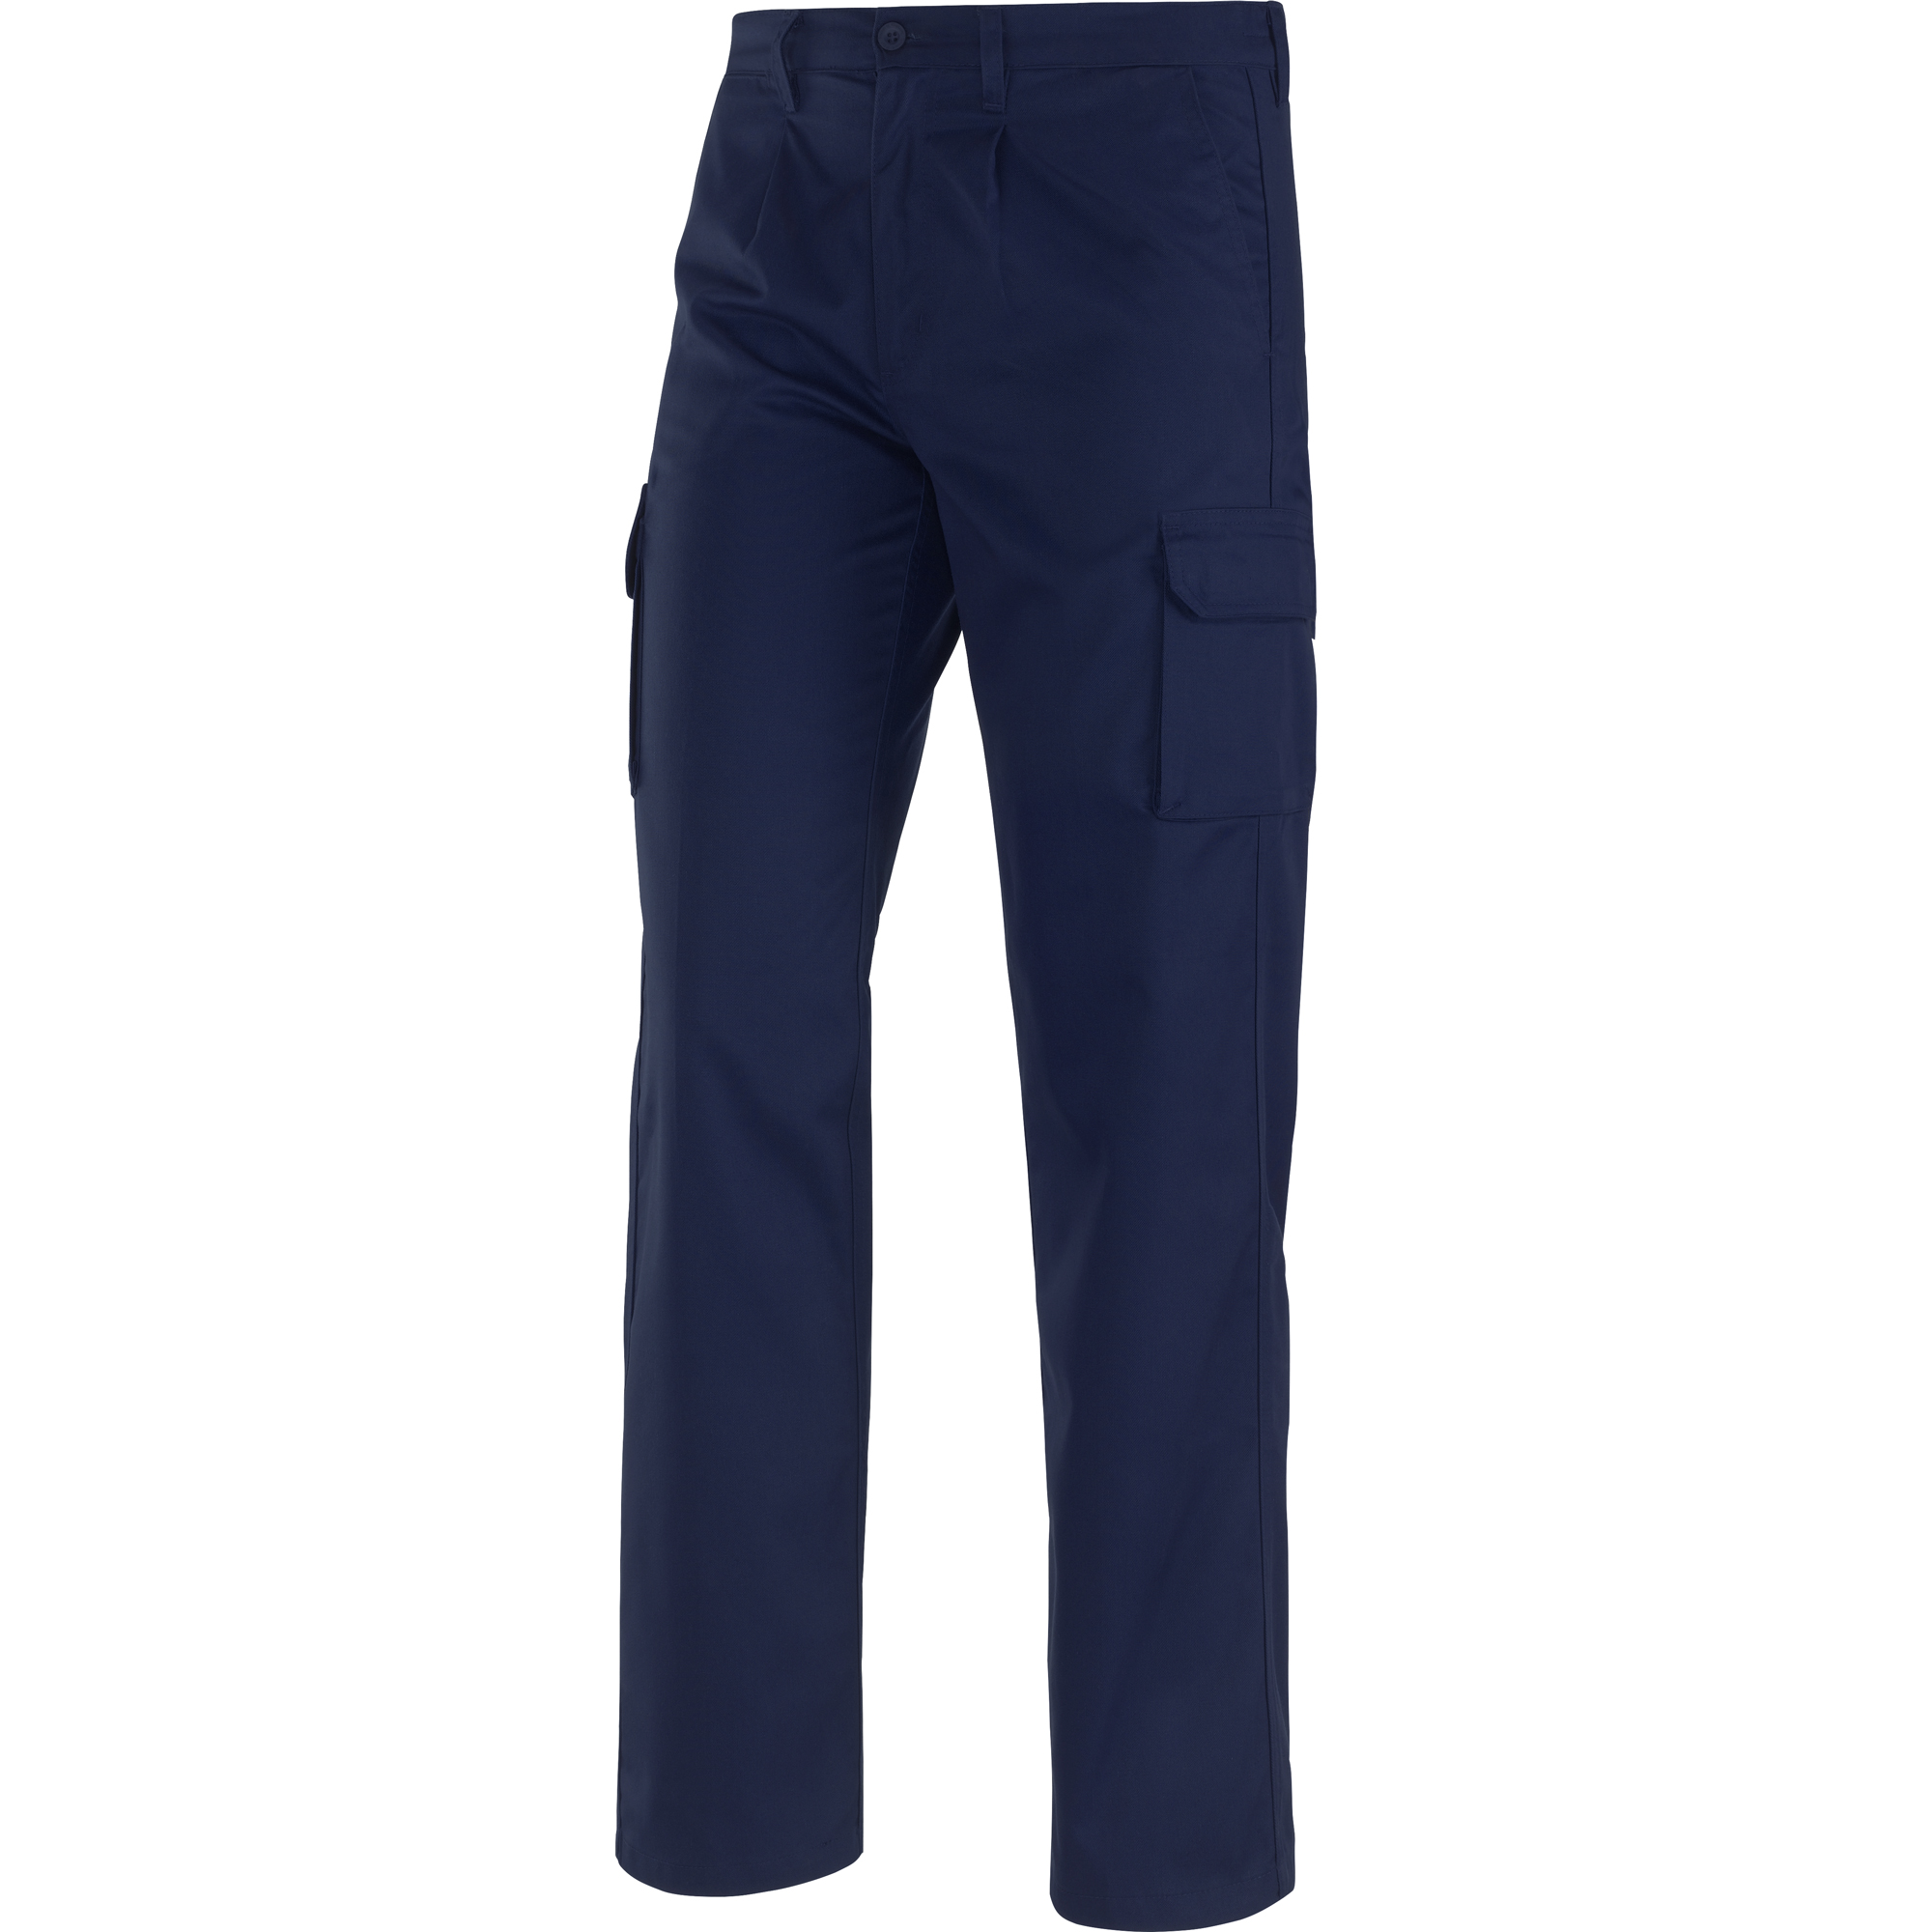 Pantaloni da lavoro Neri Spa Siena 437322, massimo comfort